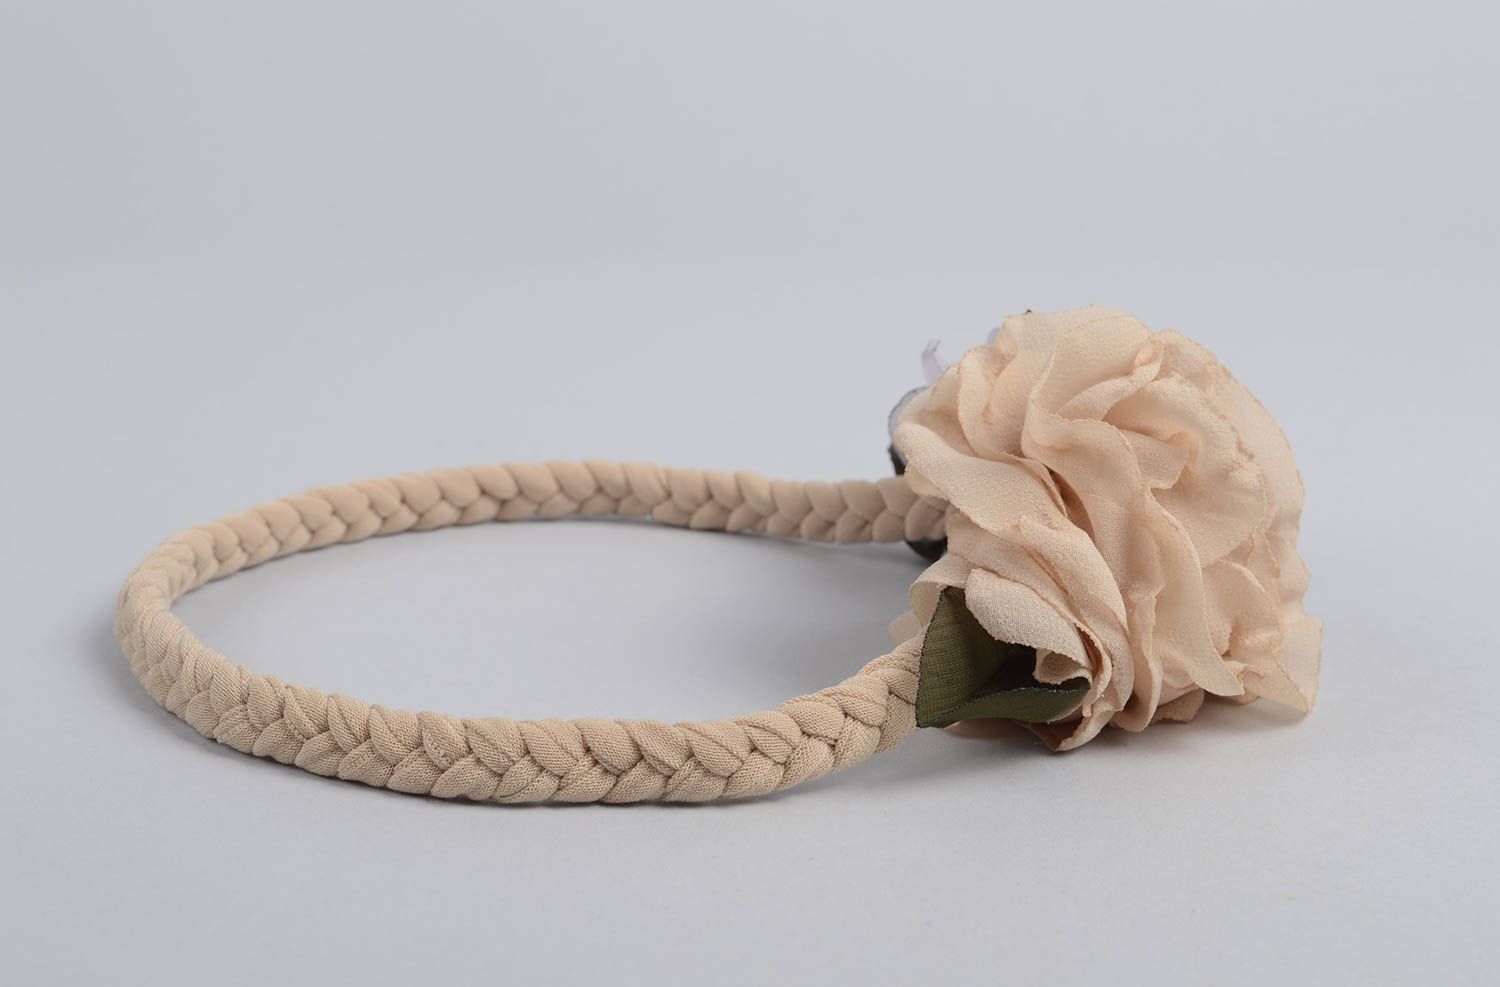 Unusual handmade flower headband stylish headband flowers in hair small gifts photo 3